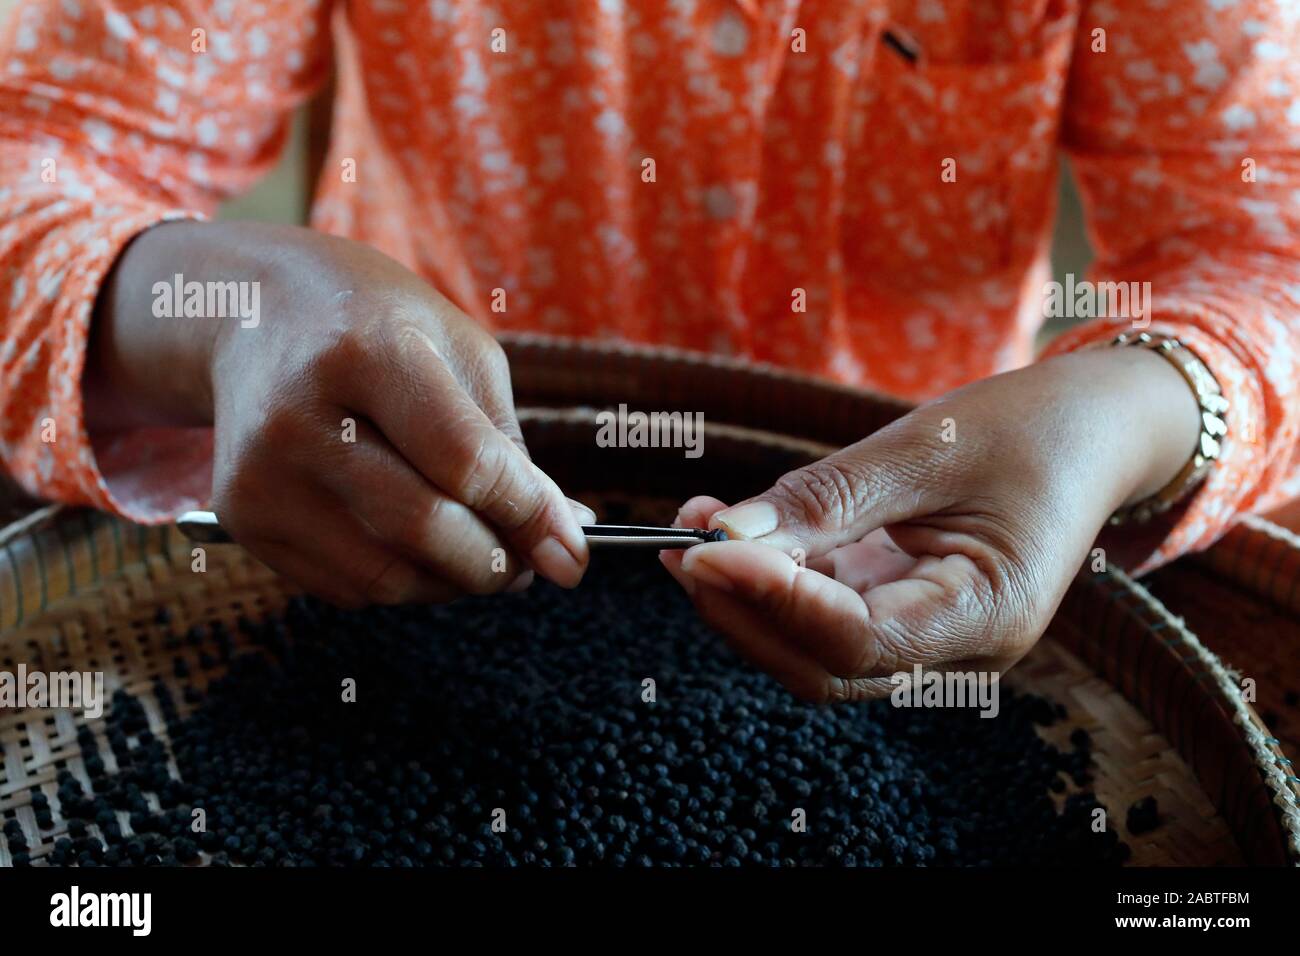 Pfeffer Bauernhof. Frau Vorbereitung Kampot schwarzer Pfeffer. Hand Auswahl der Pfeffer. Kep. Kambodscha. Stockfoto